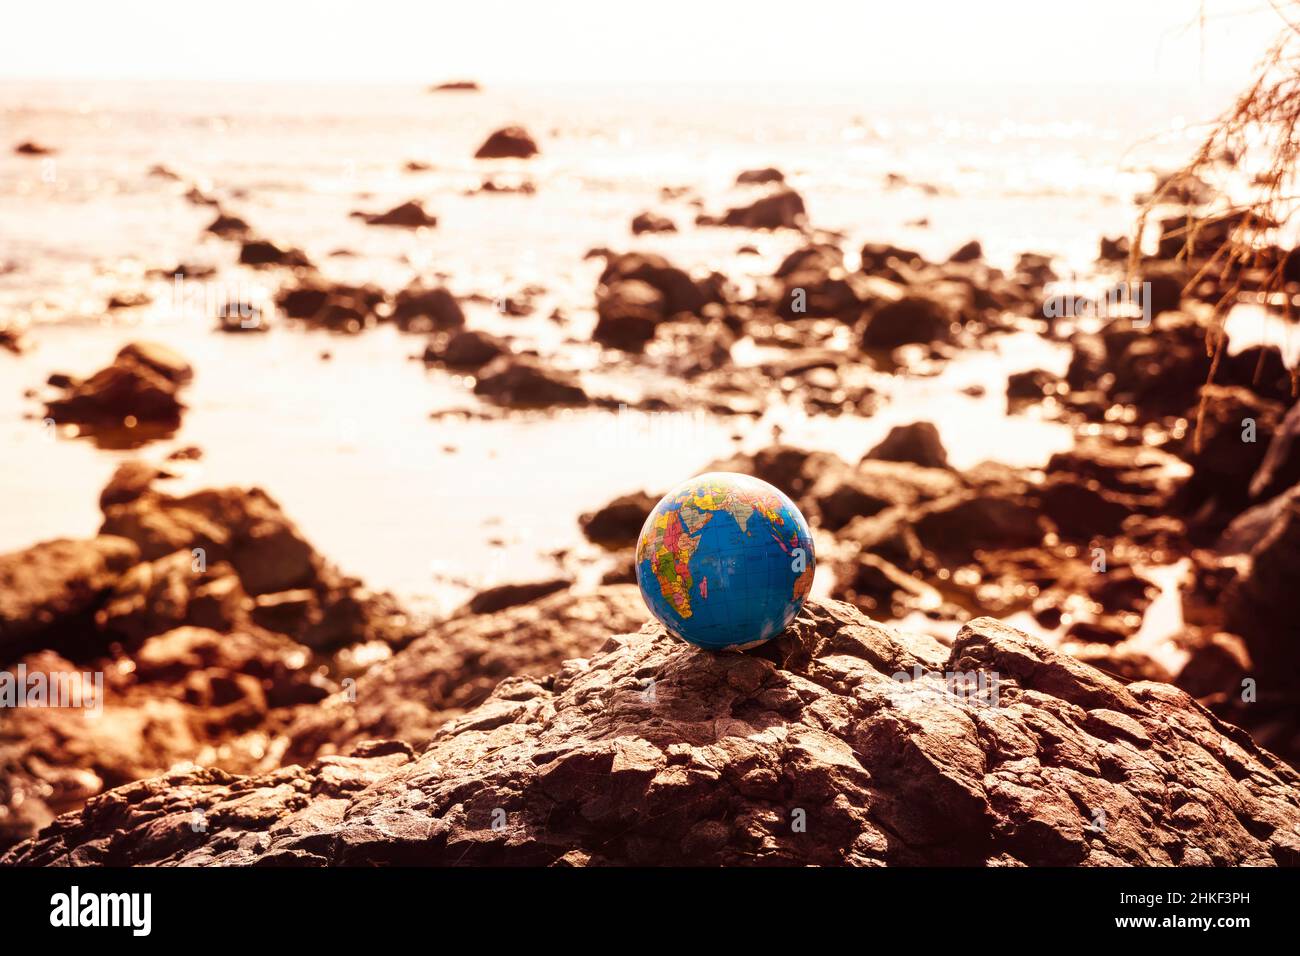 A globe on a rock on a coast by the sea Stock Photo